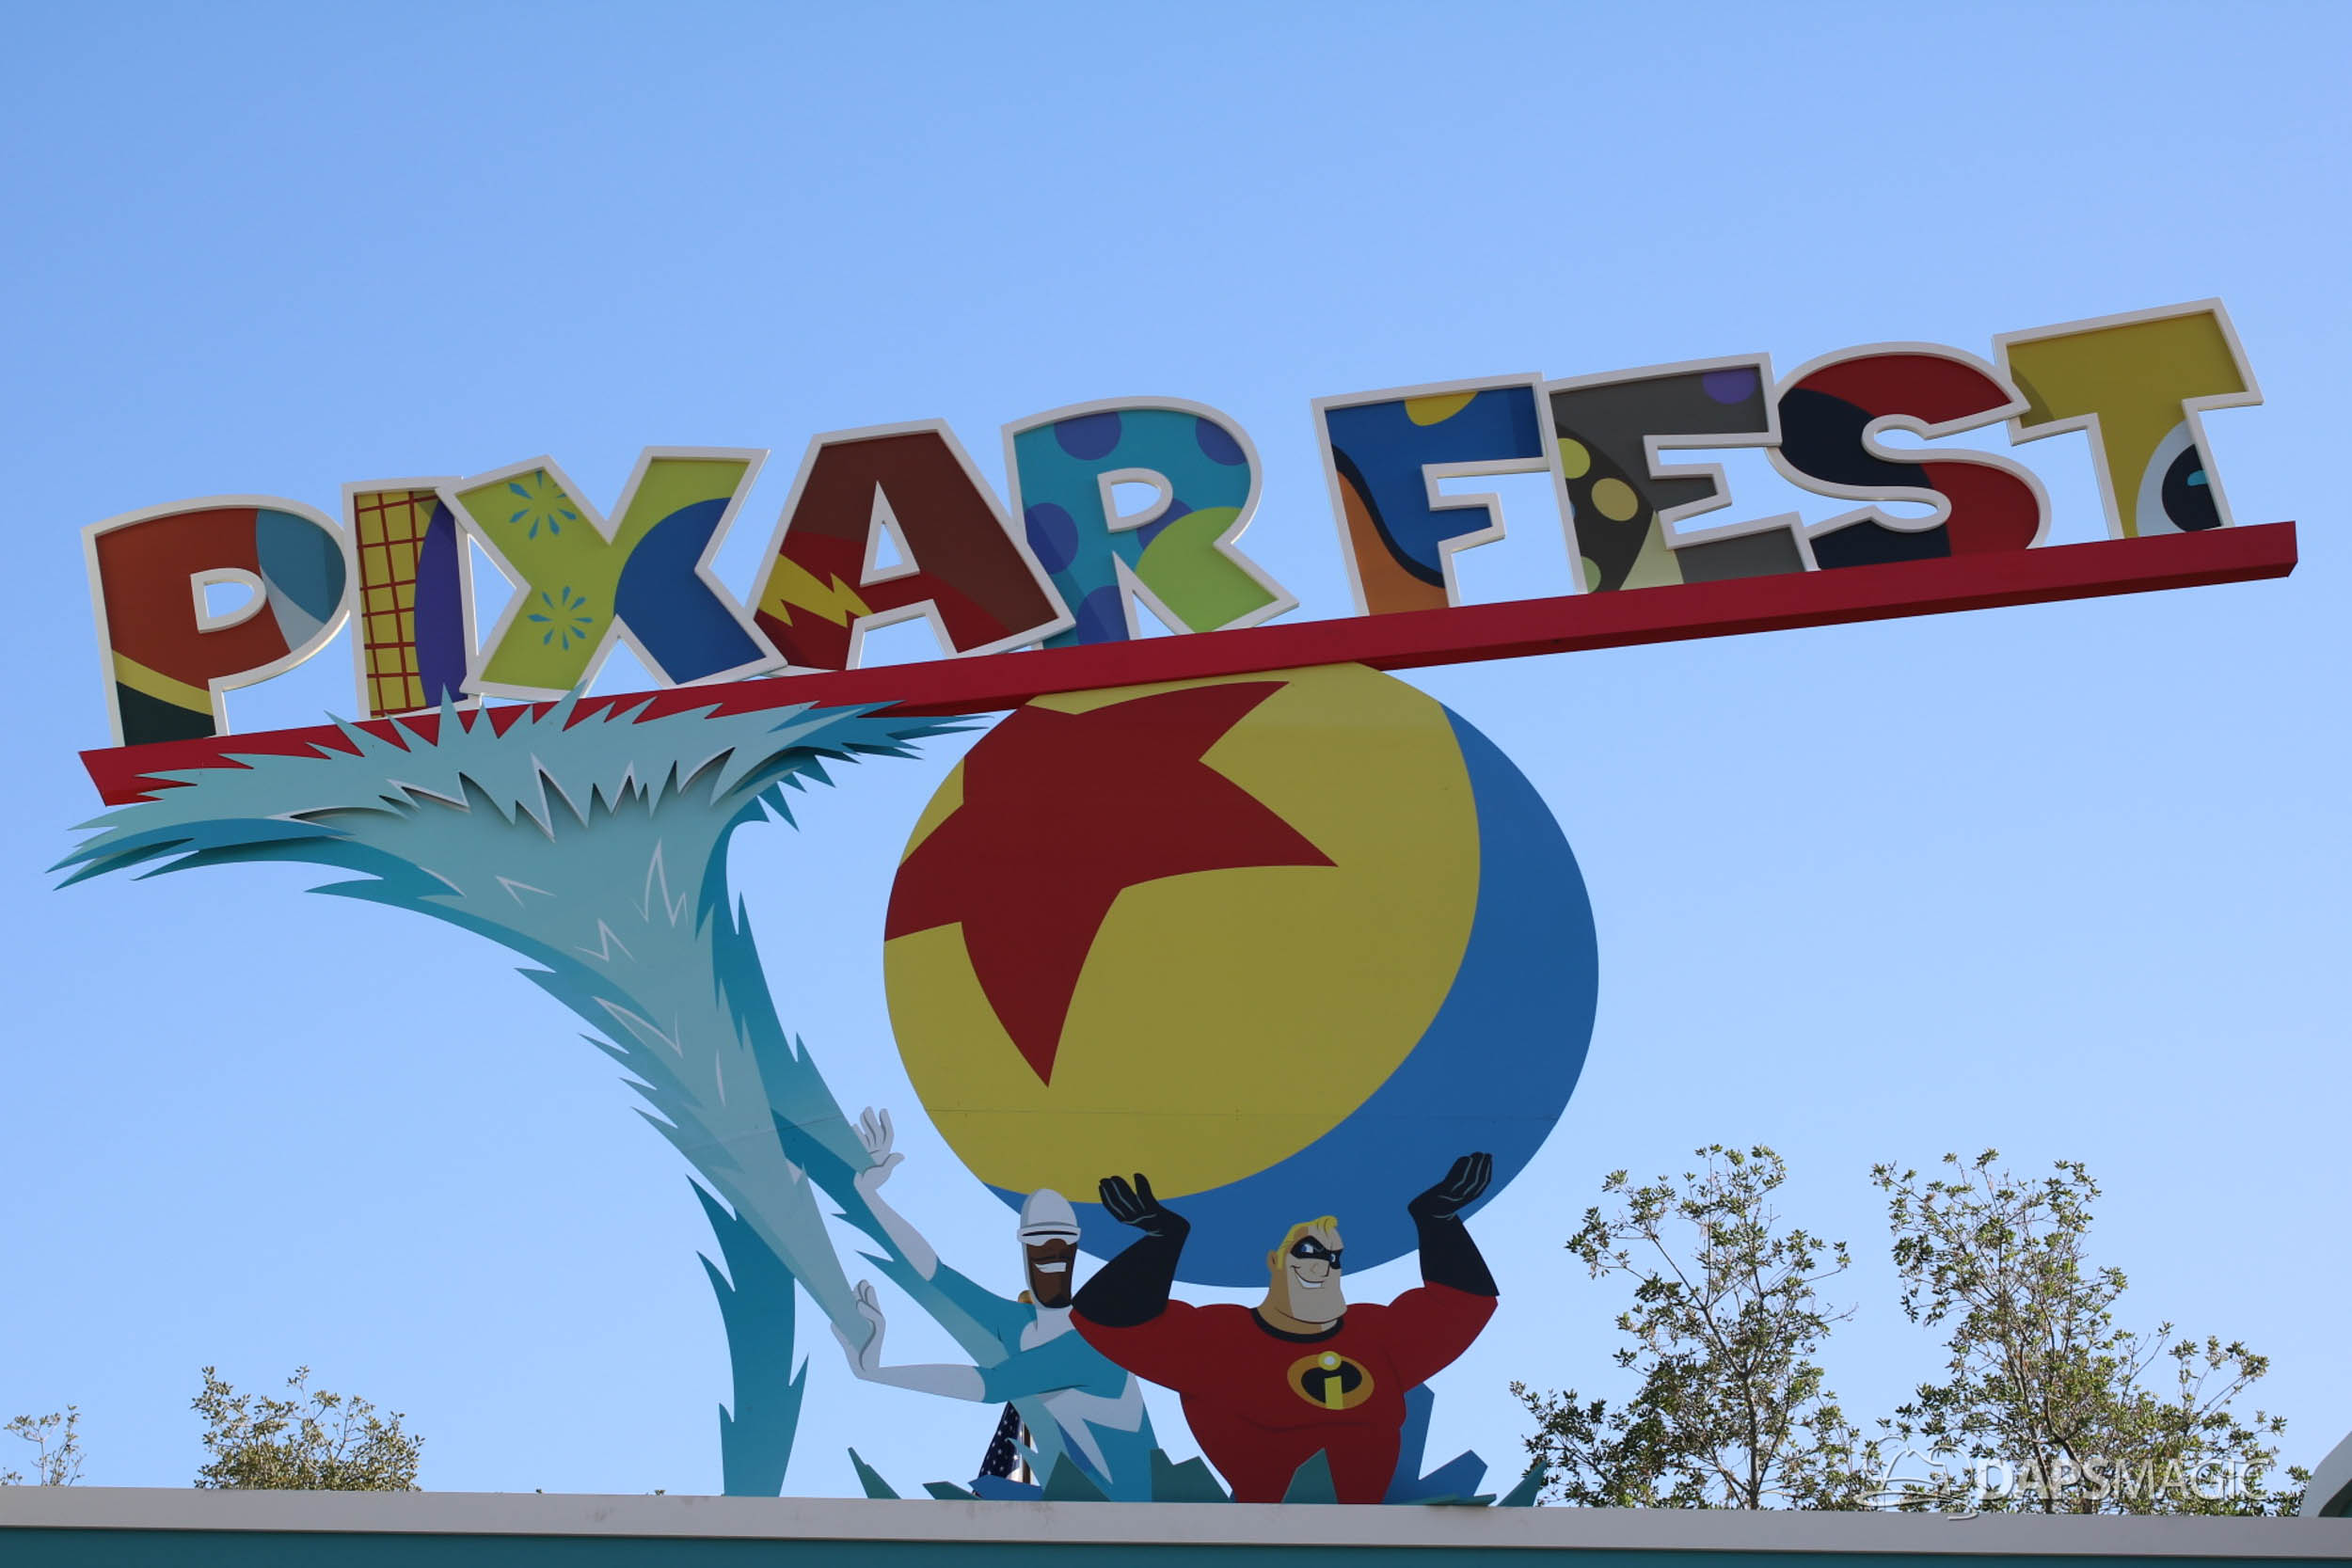 Pixar Fest Decorations Arrive at Disneyland Resort